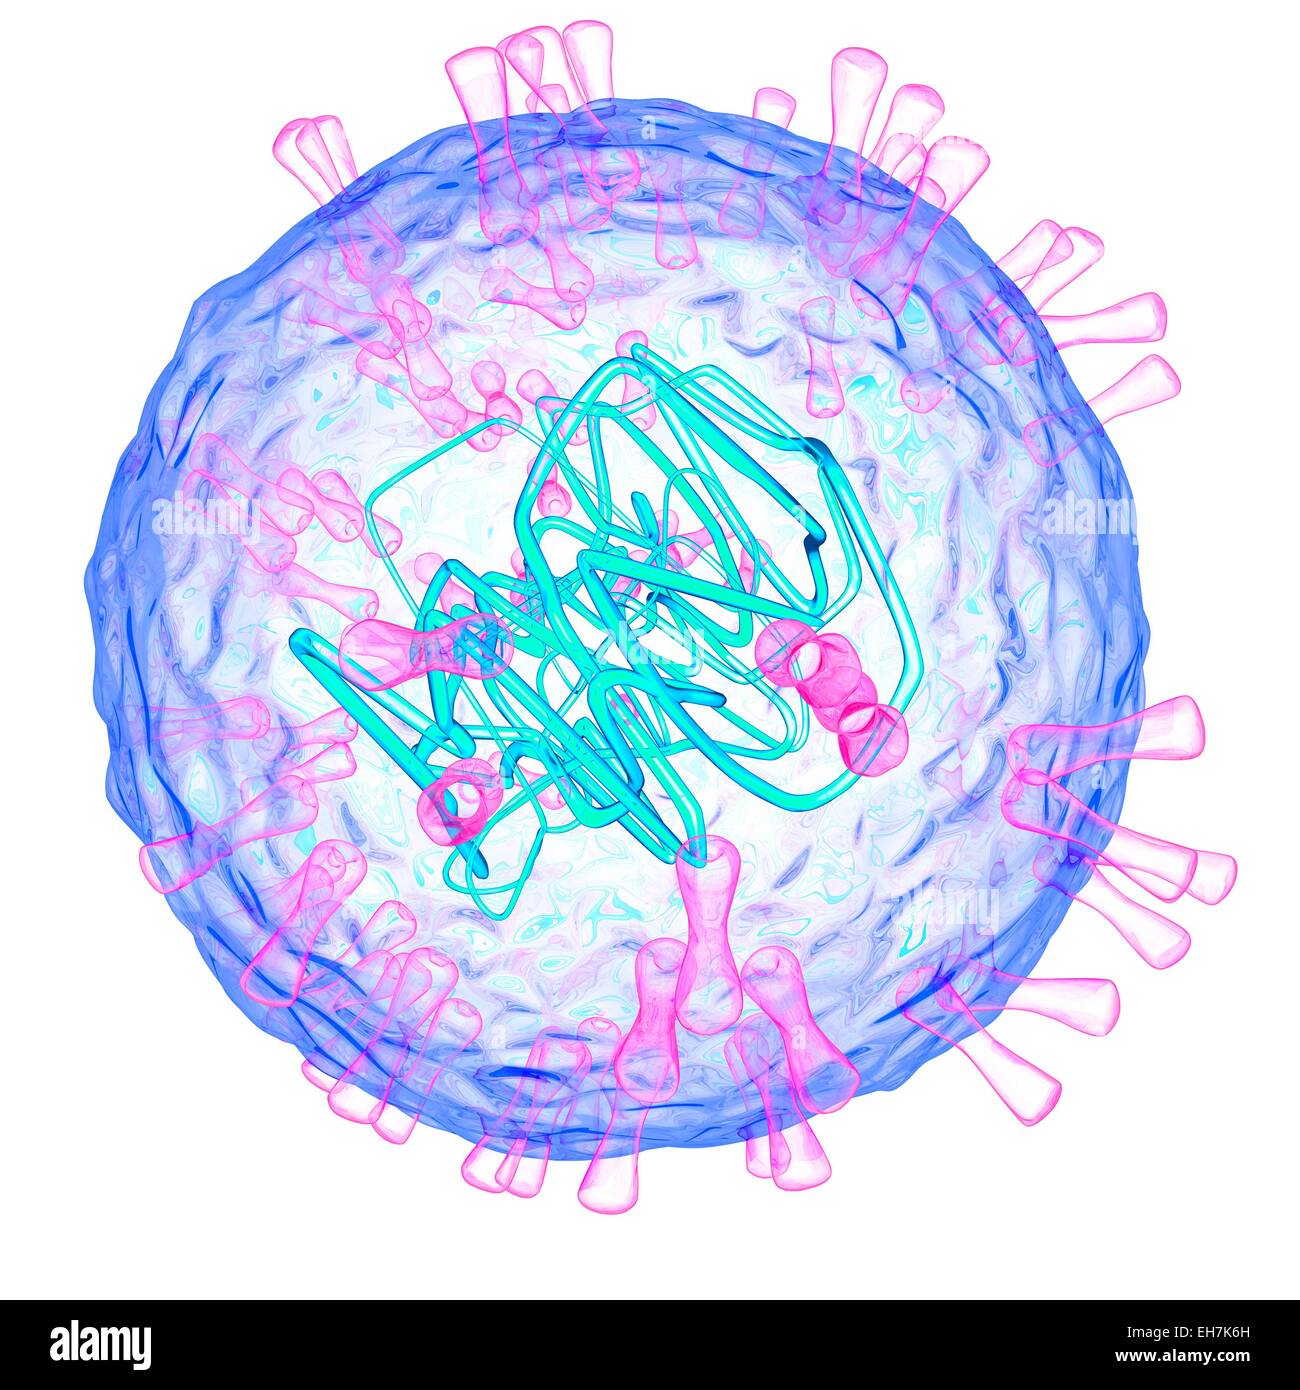 Herpes simplex type 2 virus, illustration Stock Photo